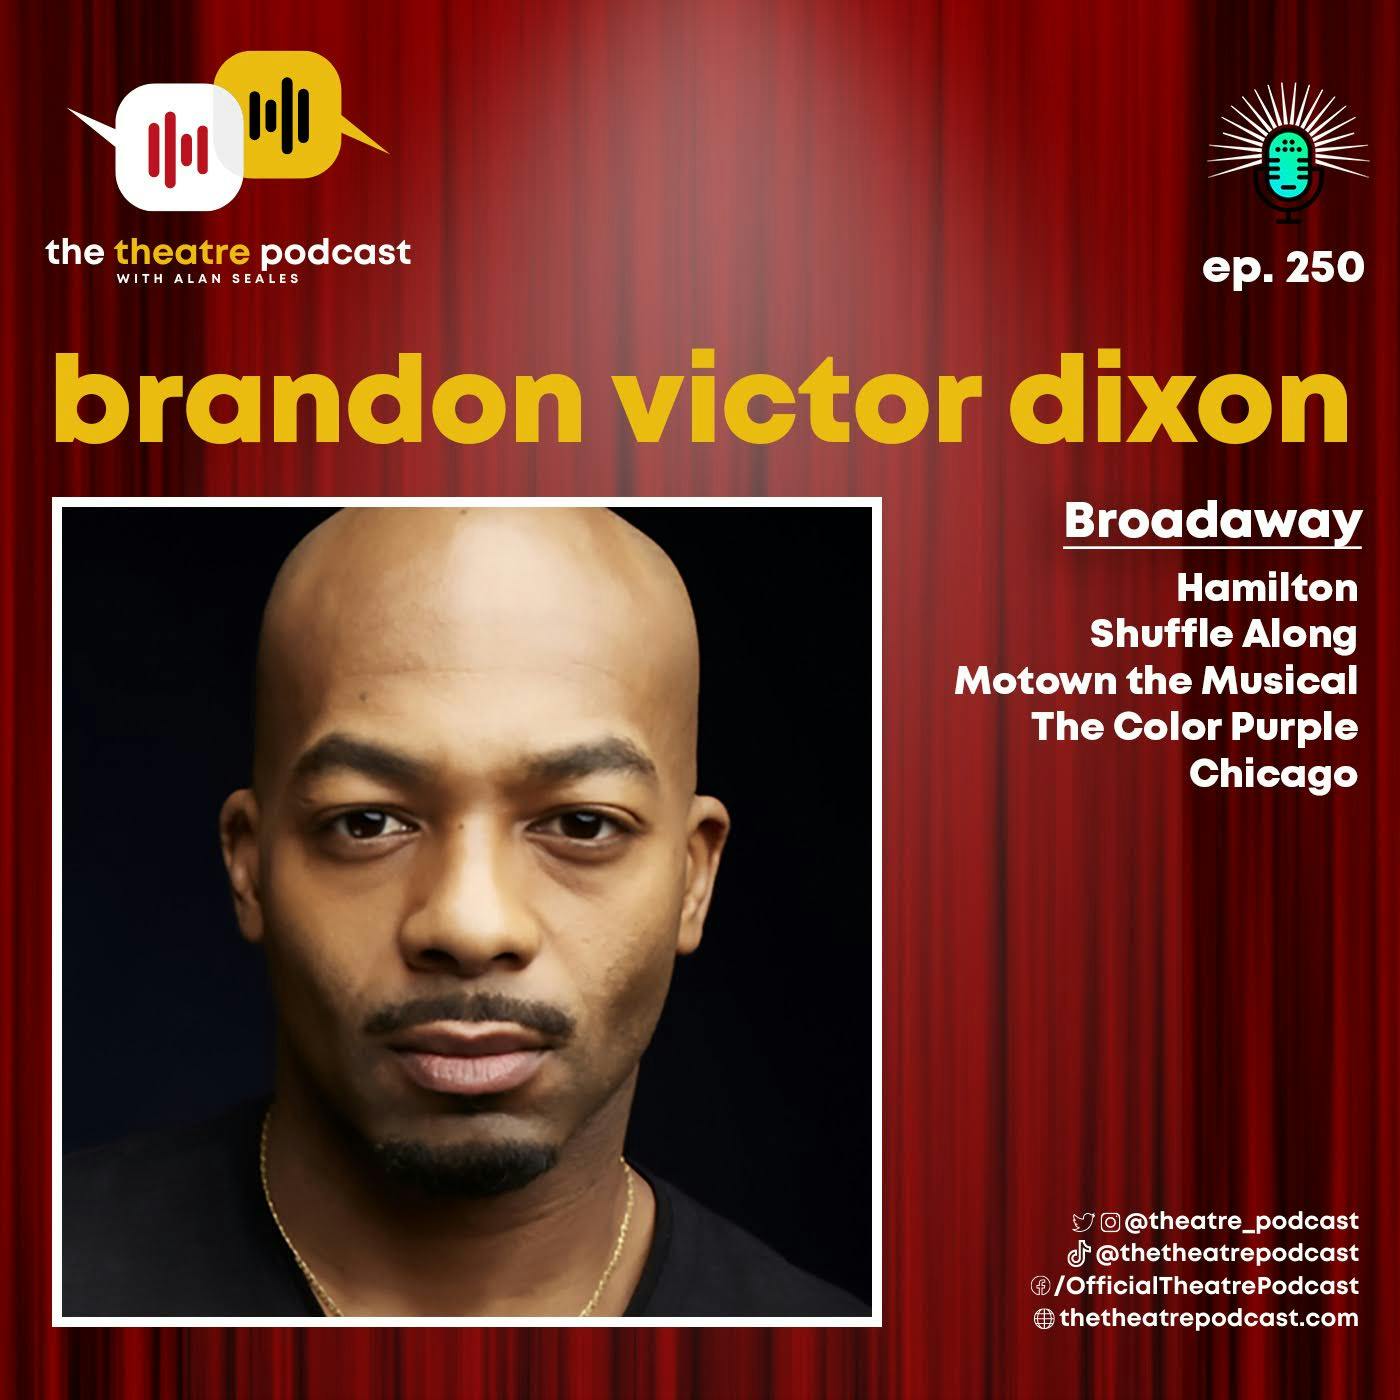 Ep250 - Brandon Victor Dixon: Driving Change Using the Arts